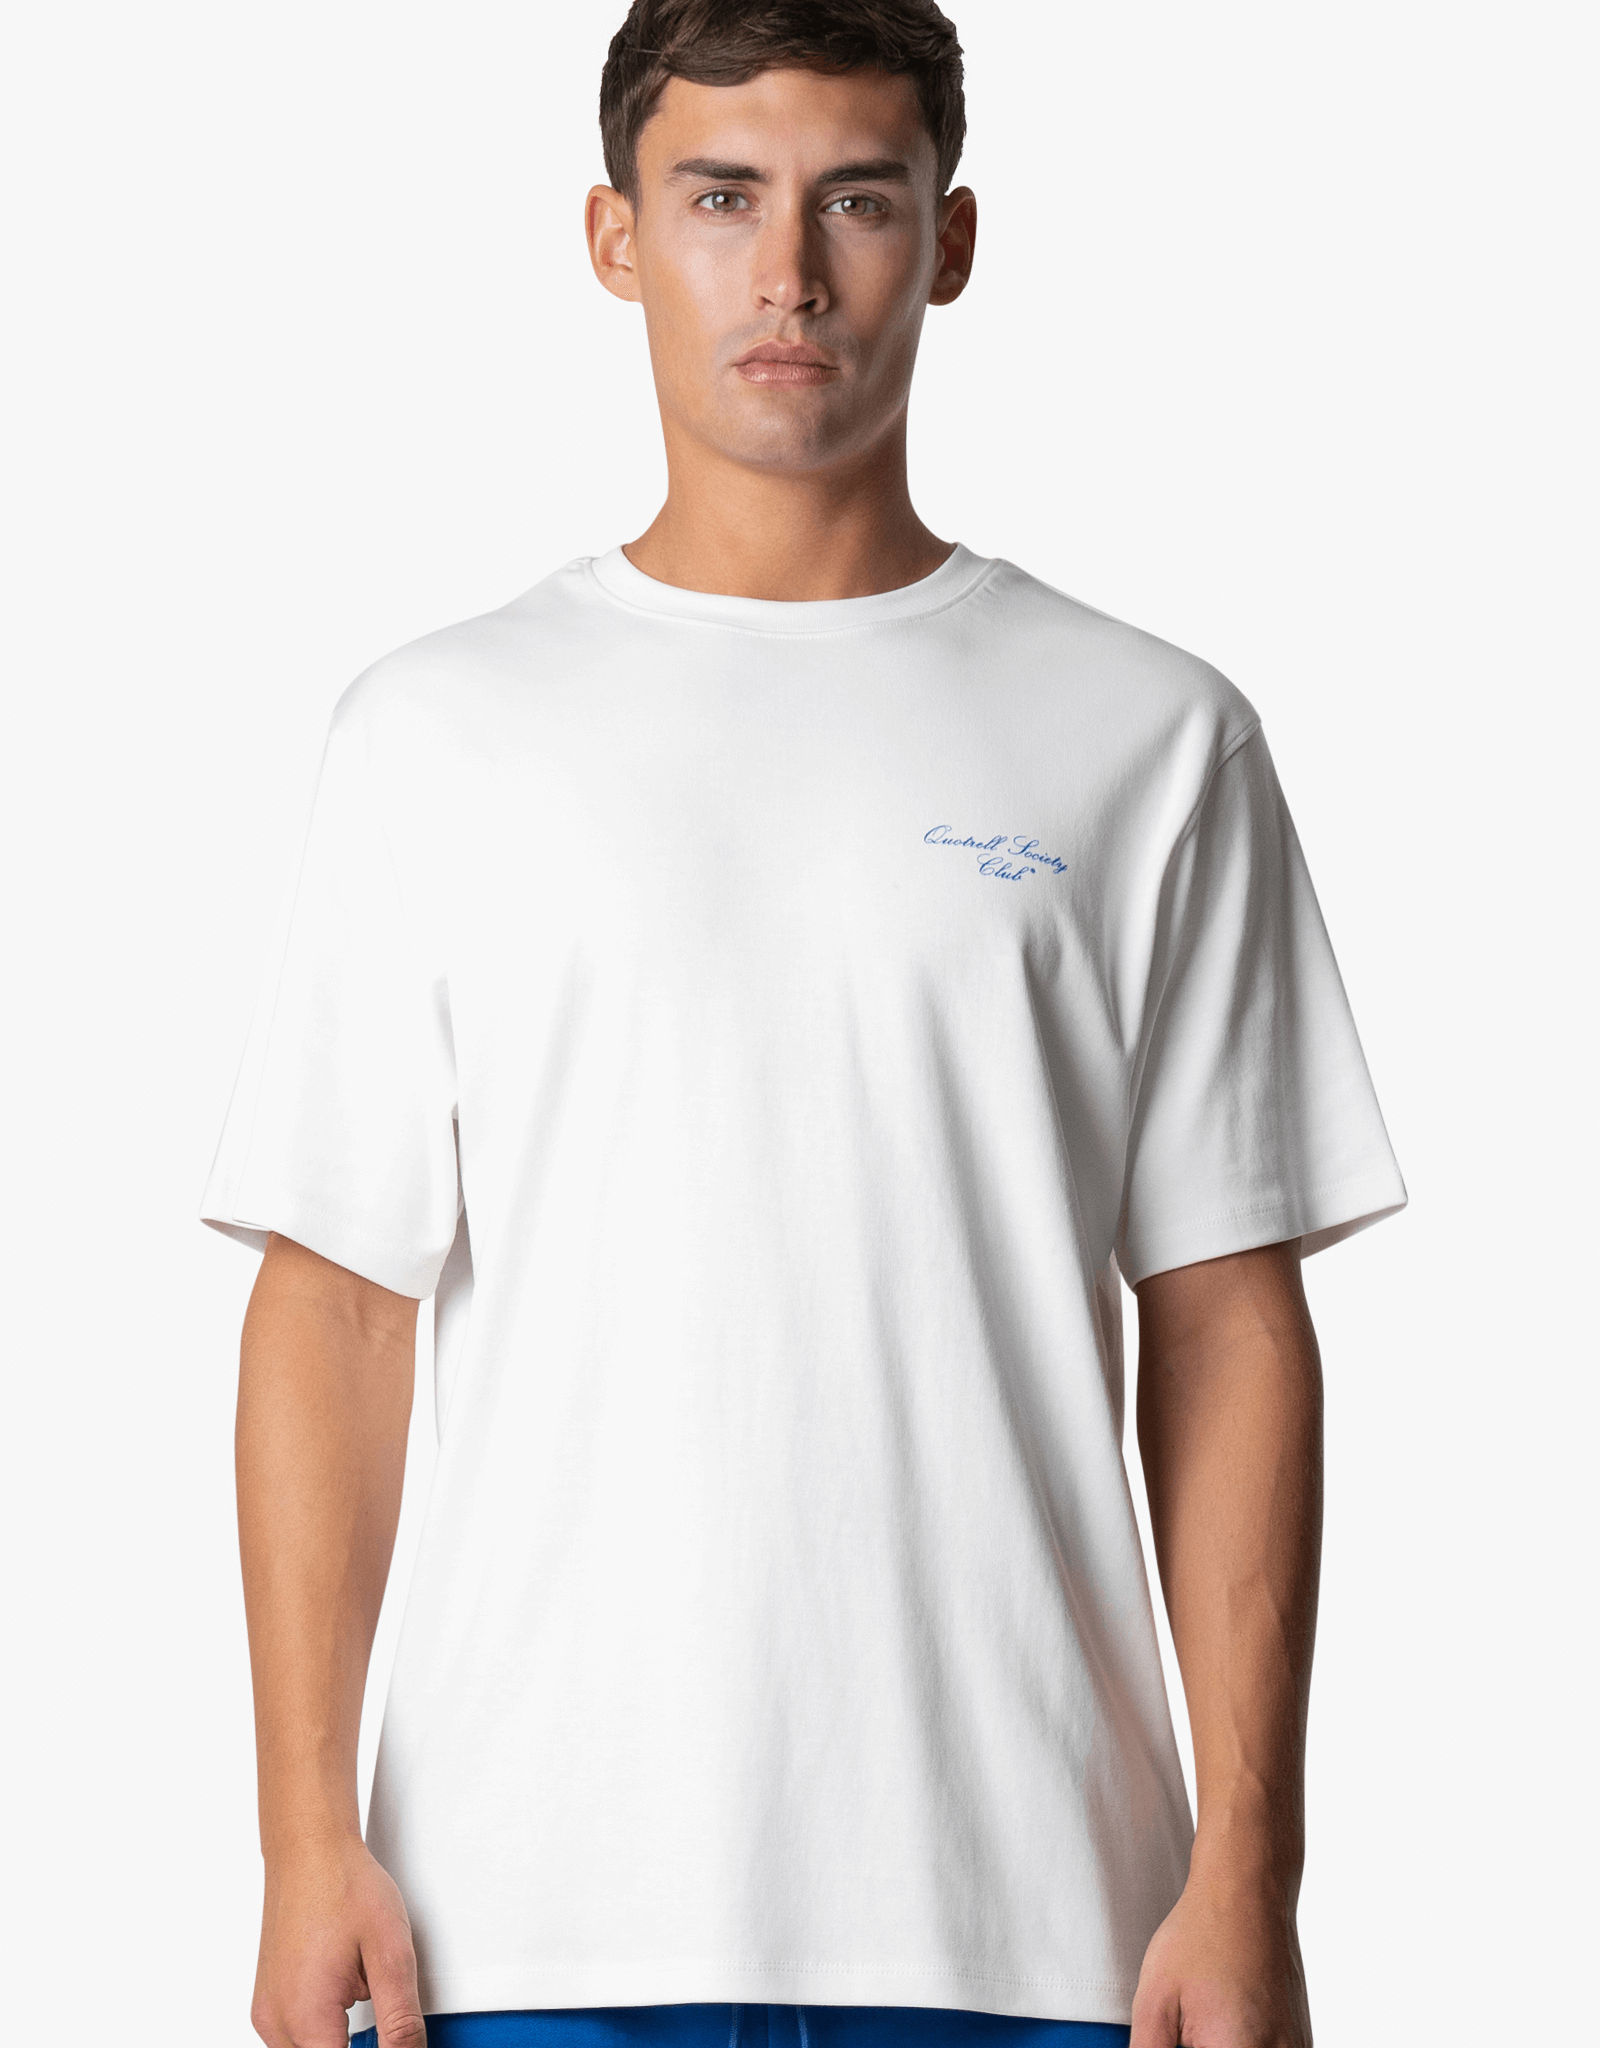 Quotrell Society Club T-Shirt